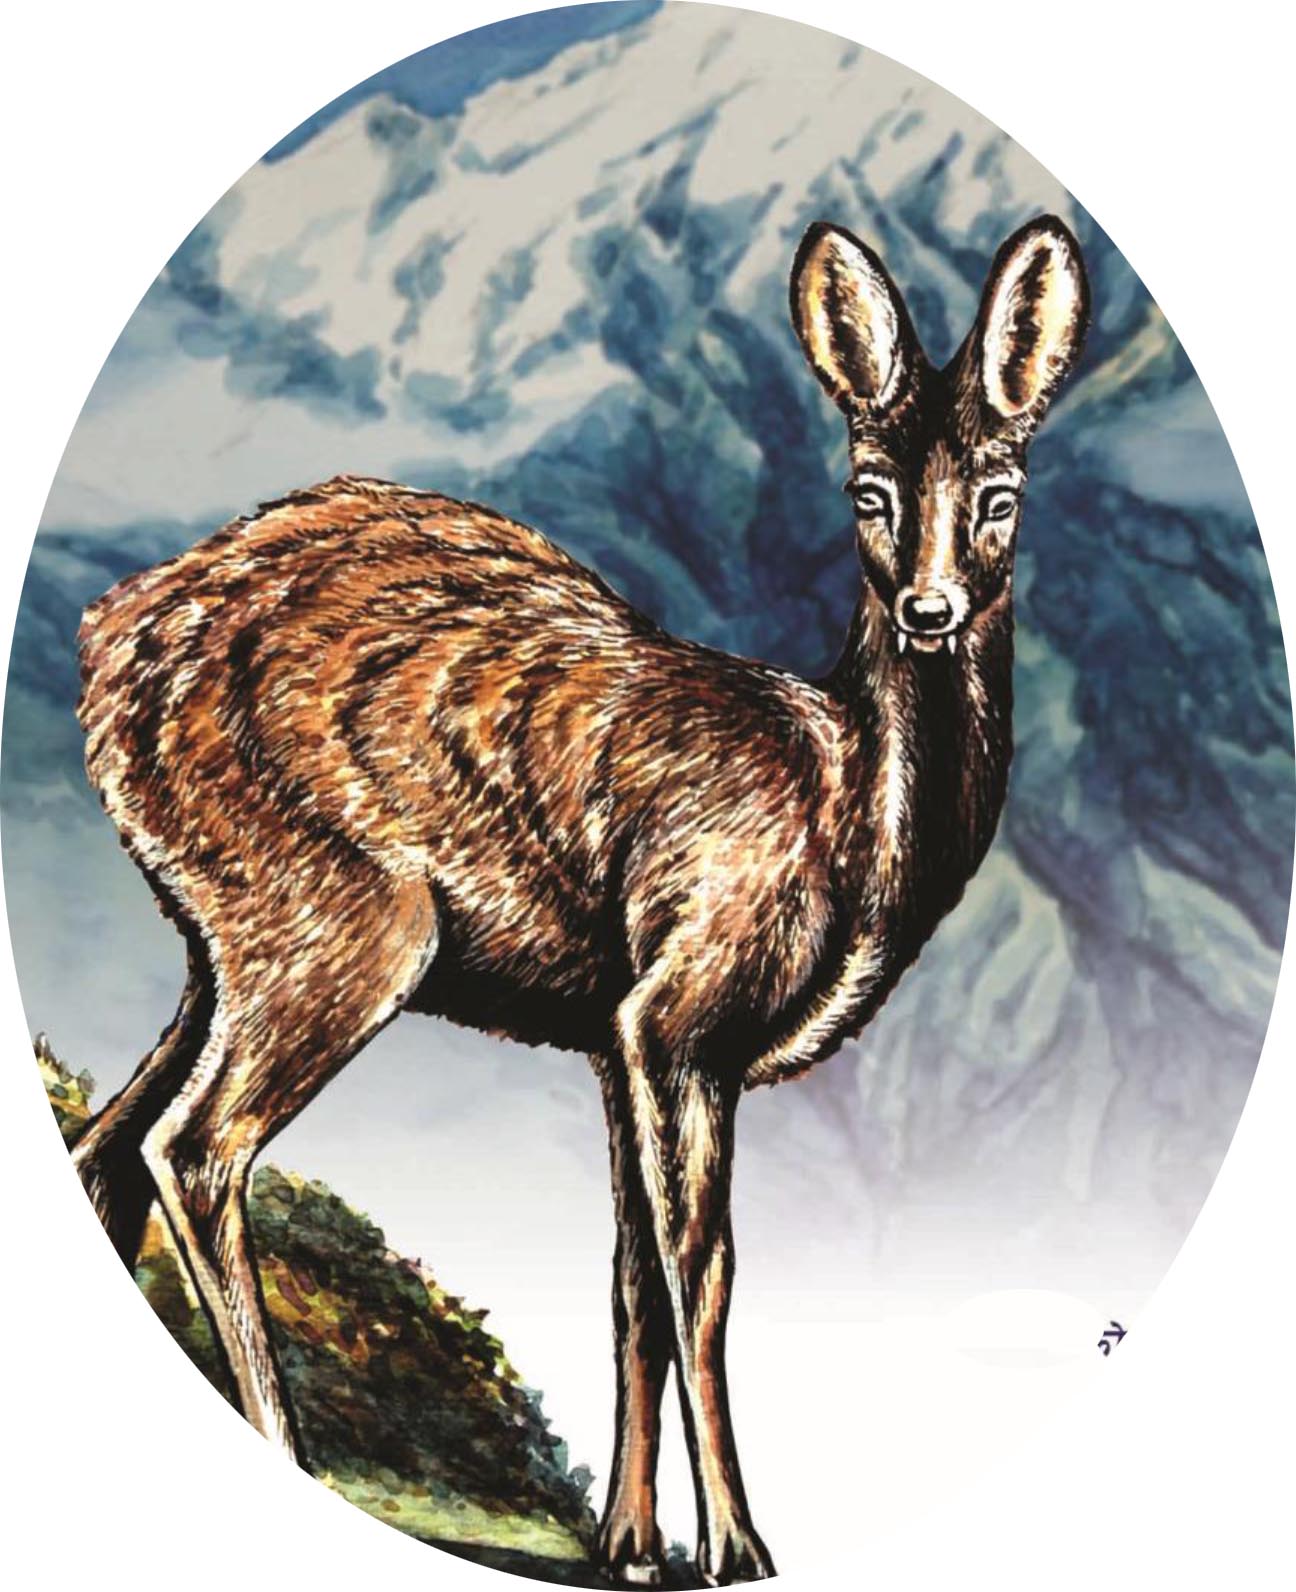 Himalayan Musk Deer. Poster: Rufford.org